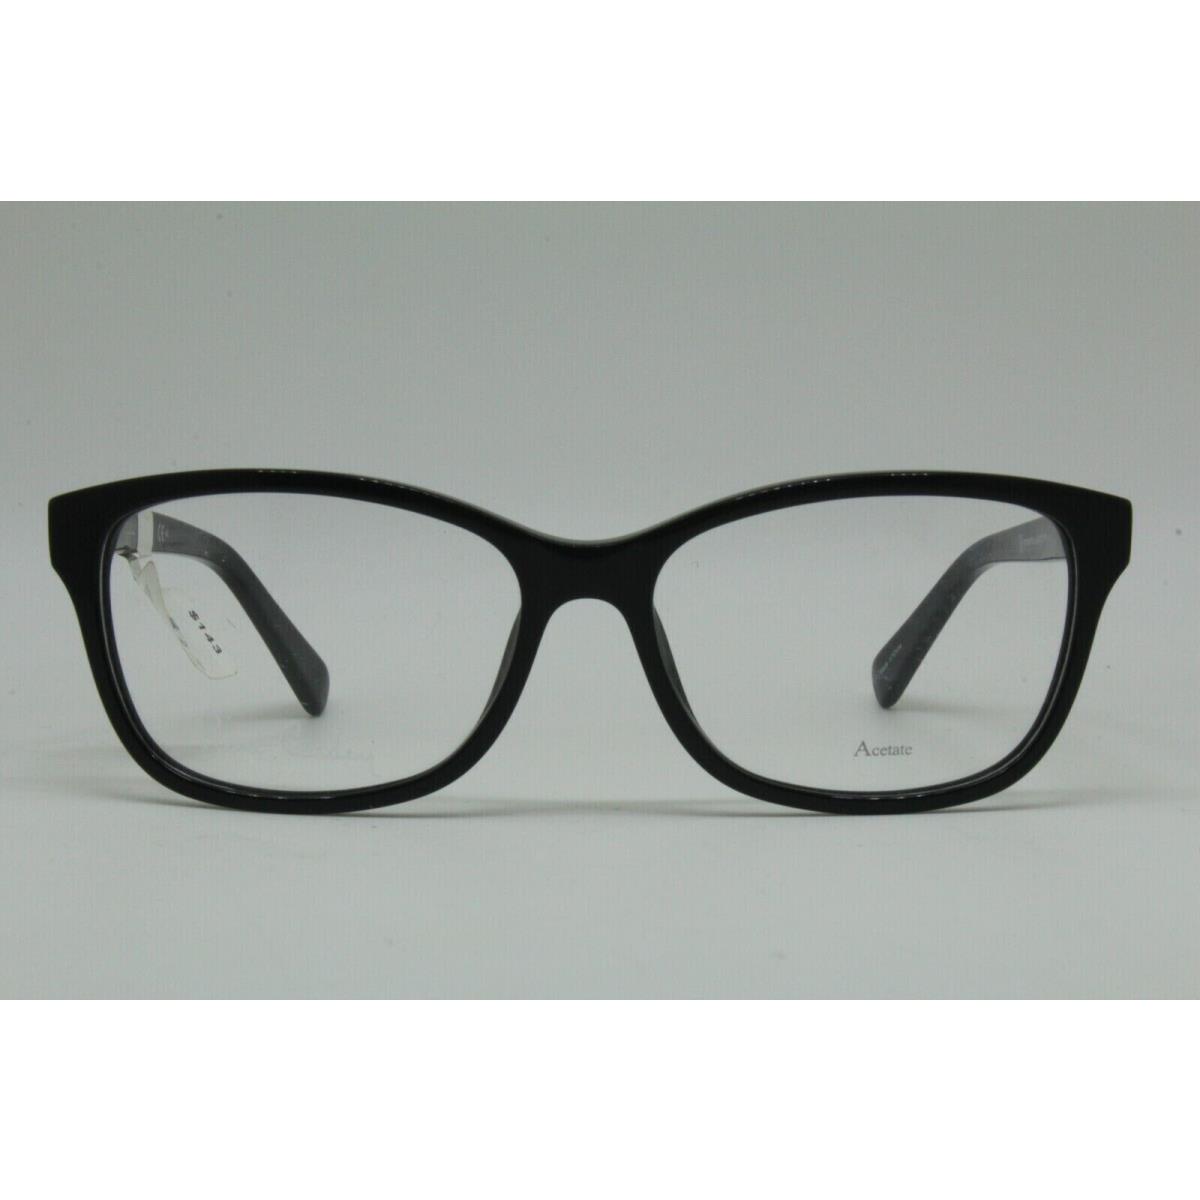 1 Unit Pierre Cardin Black Havana Eyeglass Frame 53-14-140 159